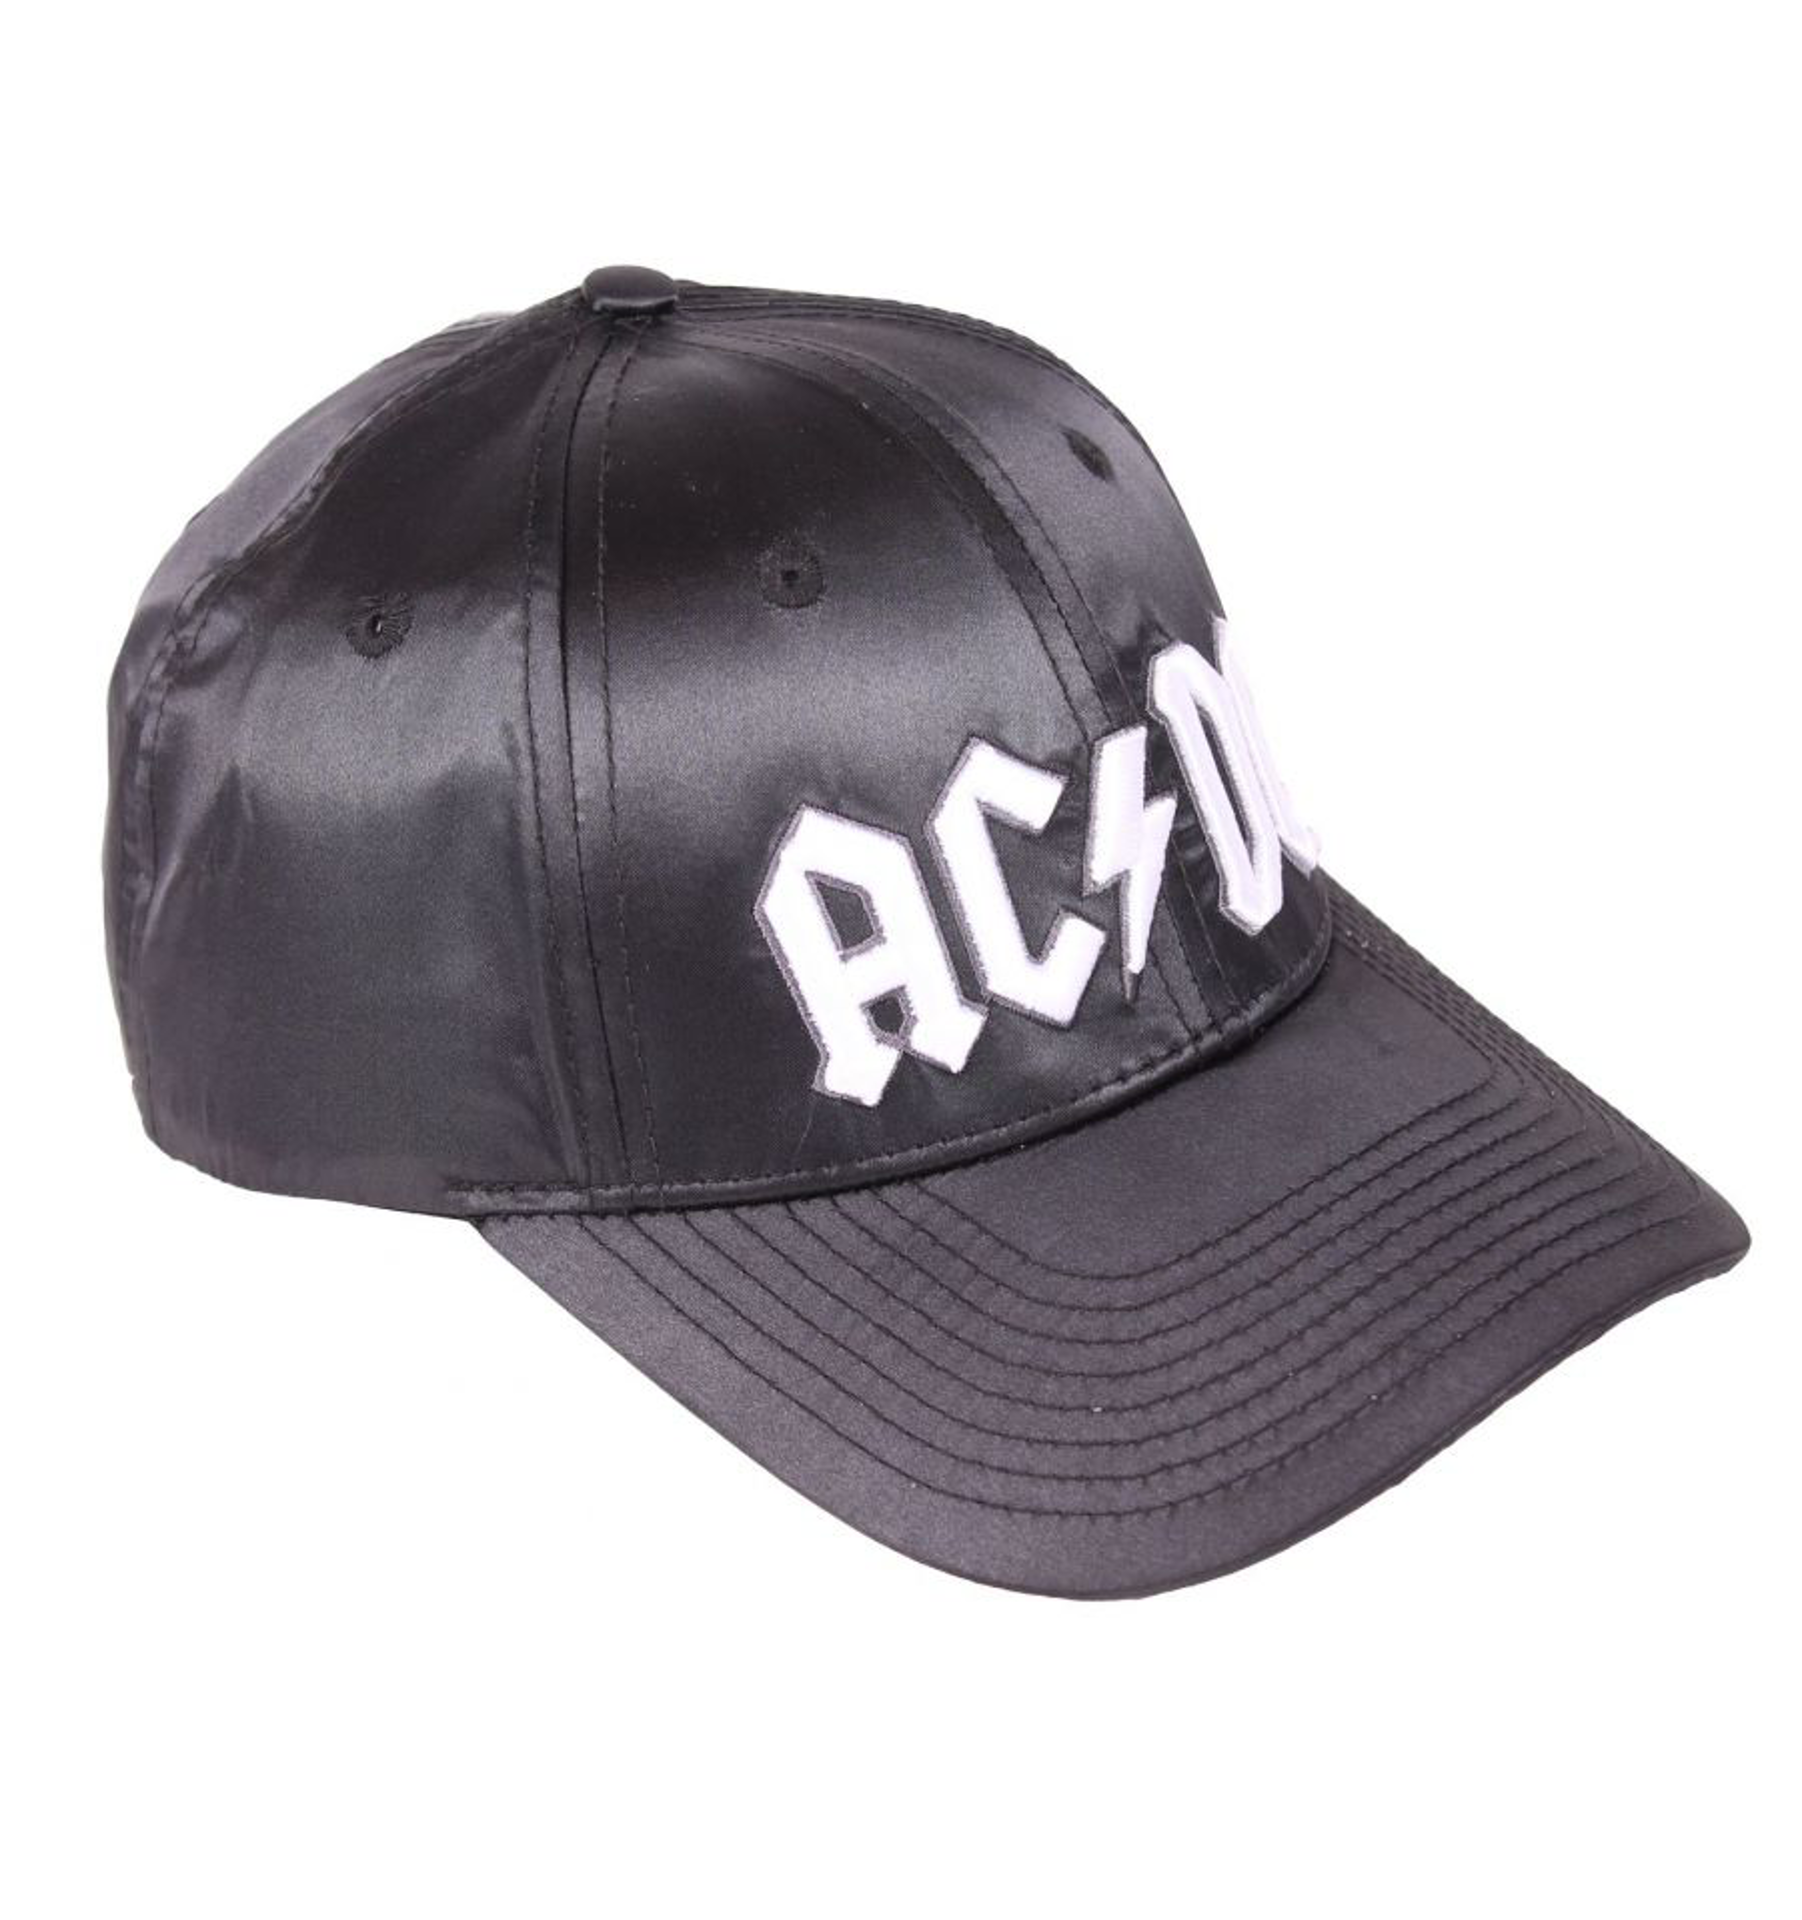 § ACDC - Back in Black Baseball Cap